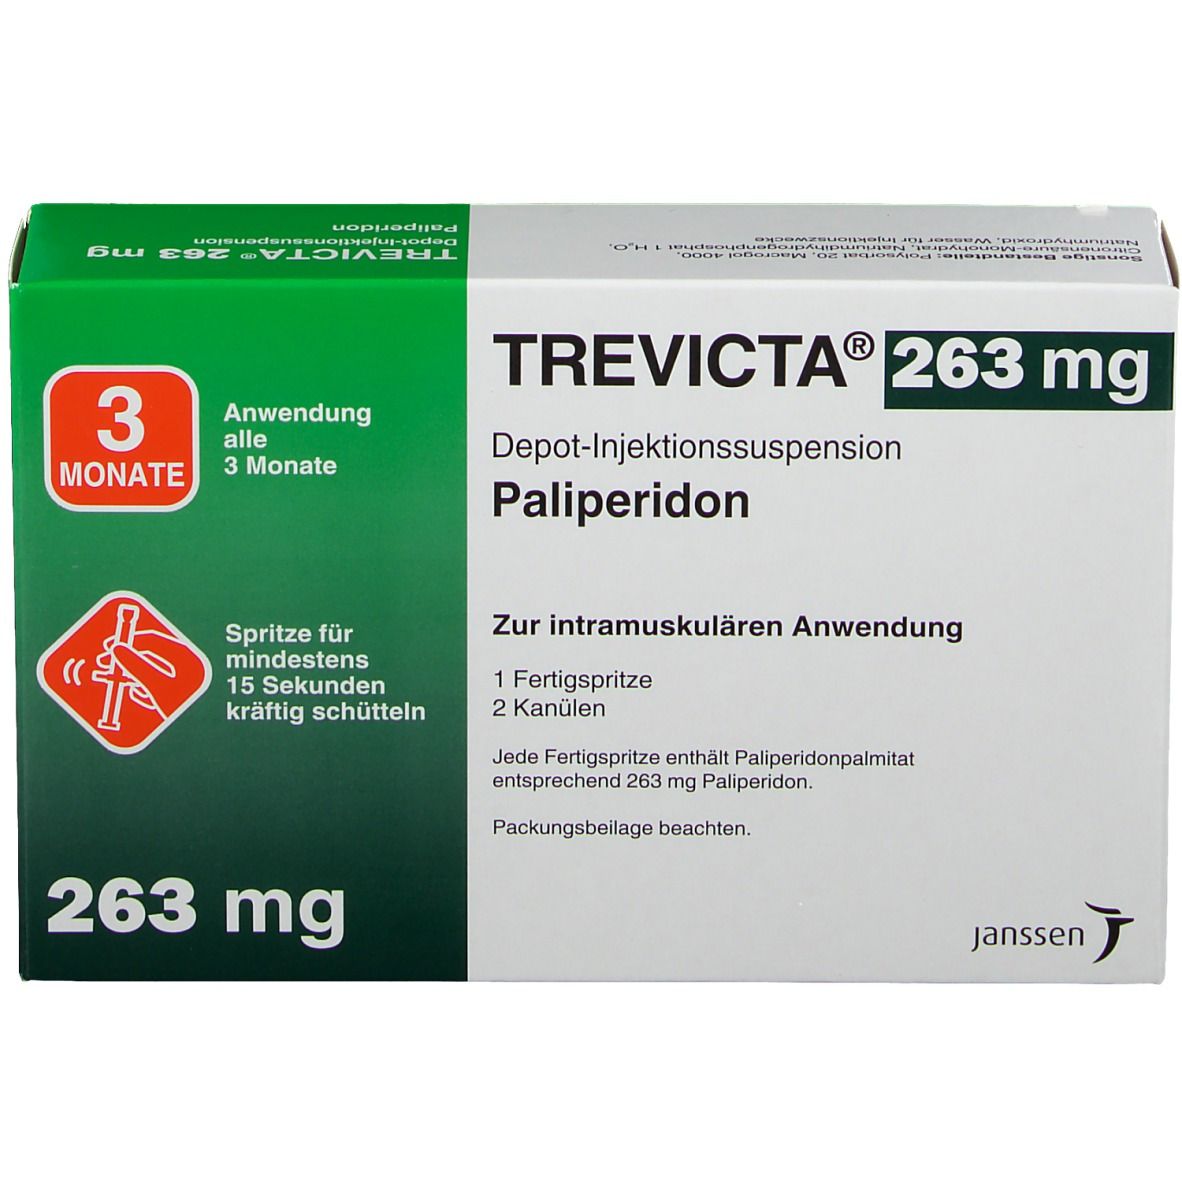 TREVICTA® 263 mg